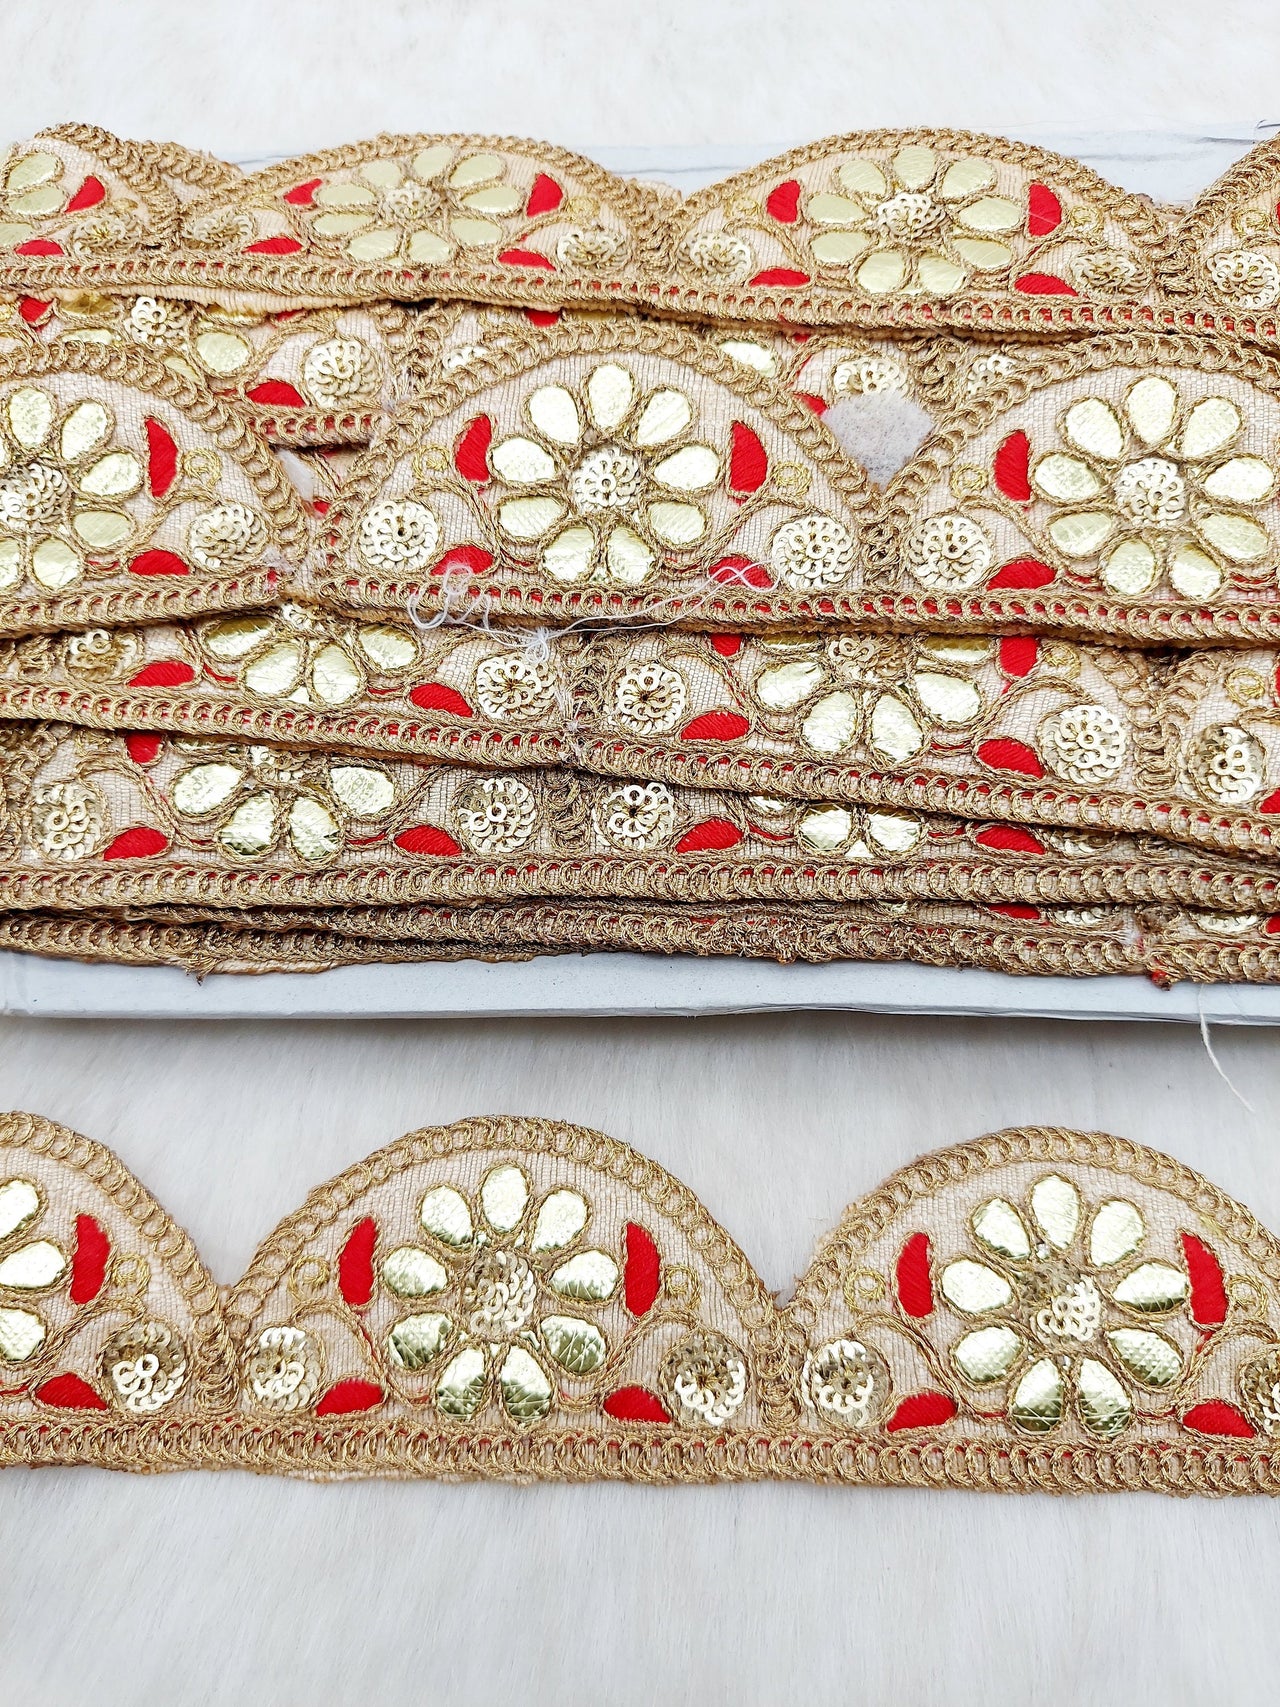 9 Yards Silk Fabric Scalloped Lace Trim, Indian Gold Foil Work Embroidery Gota Patti Sari Border Decorative Trim Craft Lace